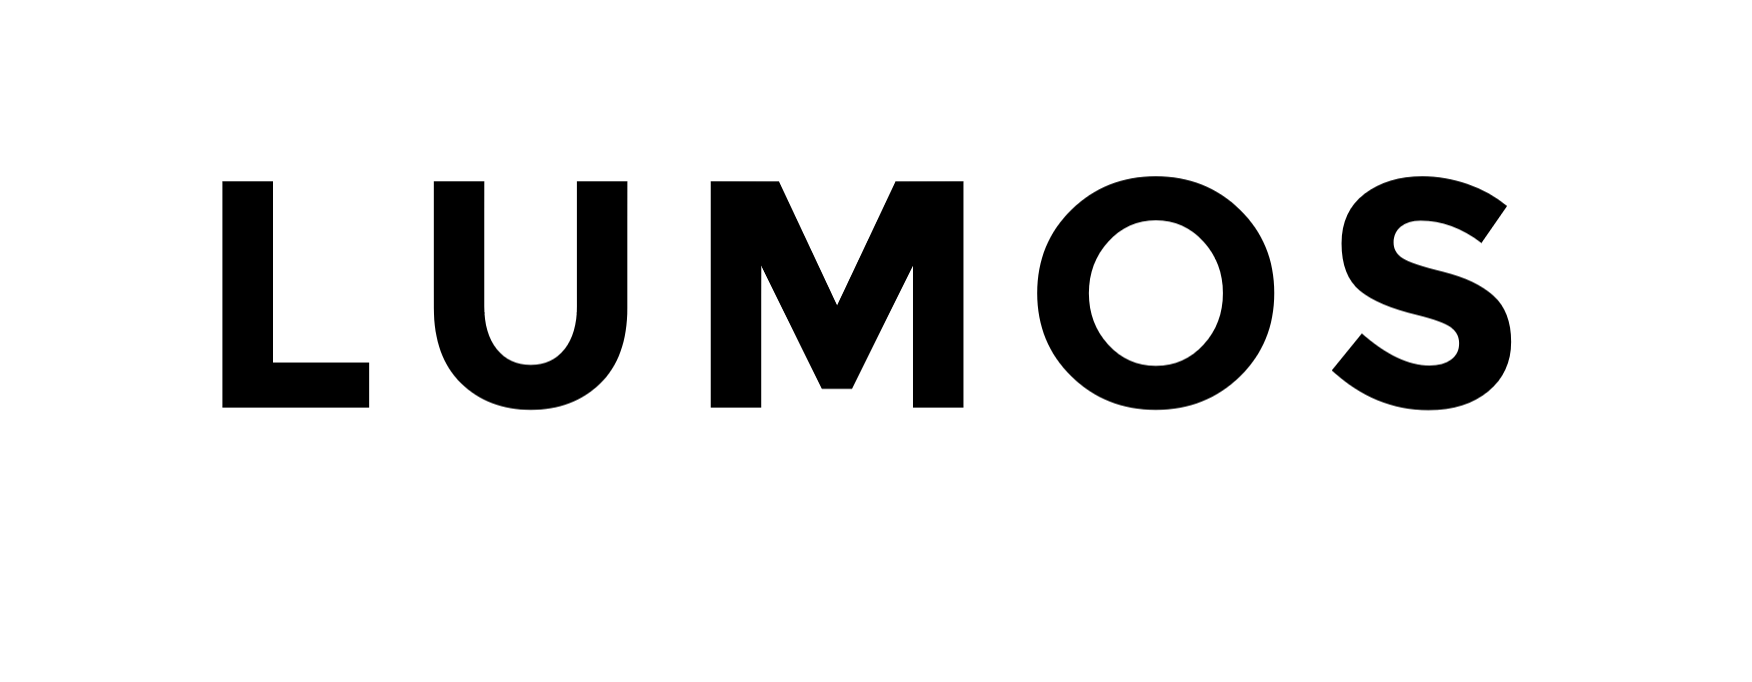 LUMOS masterfile logo words